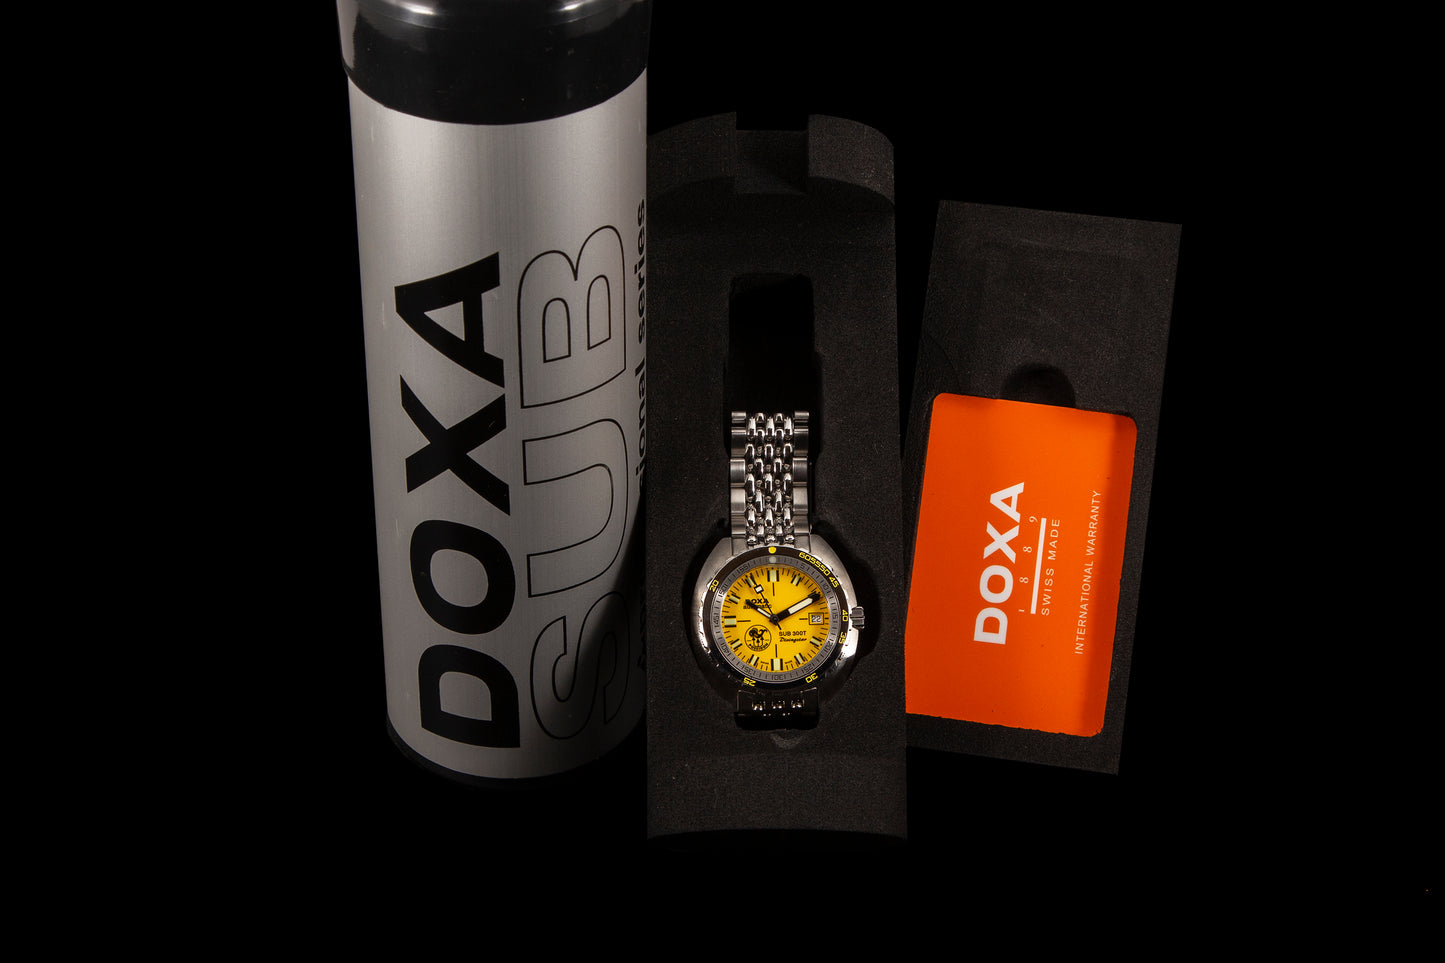 DOXA Sub 300T Divingstar 'Poseidon' Edition